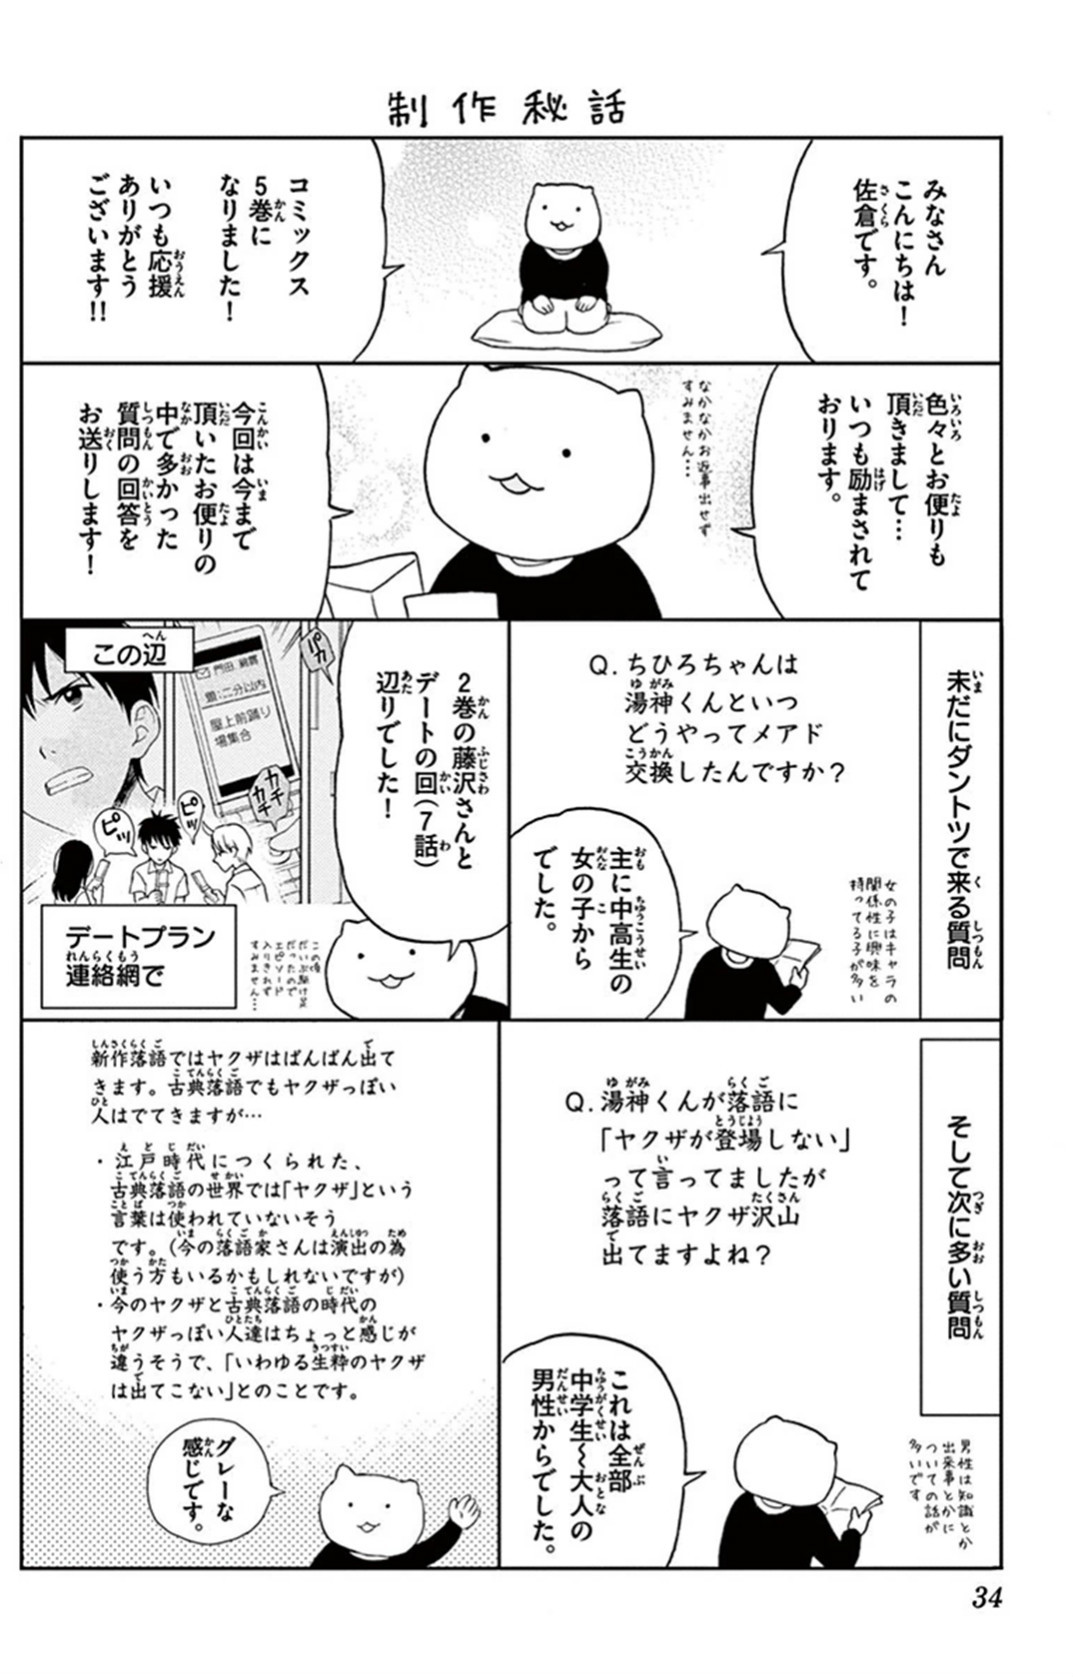 Yugami-kun ni wa Tomodachi ga Inai - Chapter 022 - Page 33